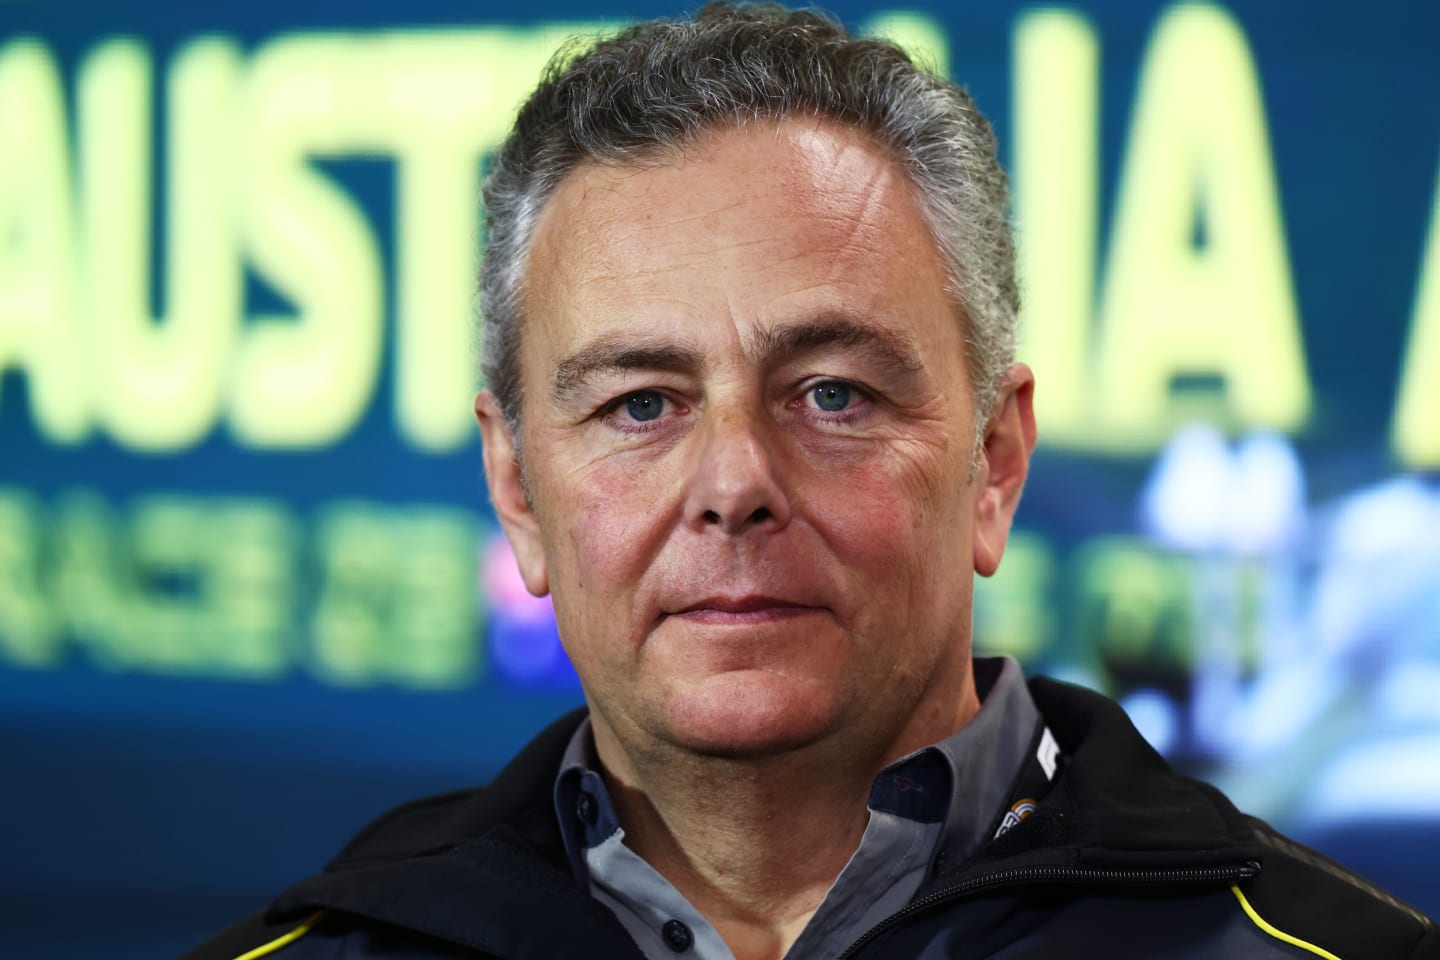 MELBOURNE, AUSTRALIA - MARCH 31: Director of Pirelli F1 Mario Isola looks on in the Team Principals